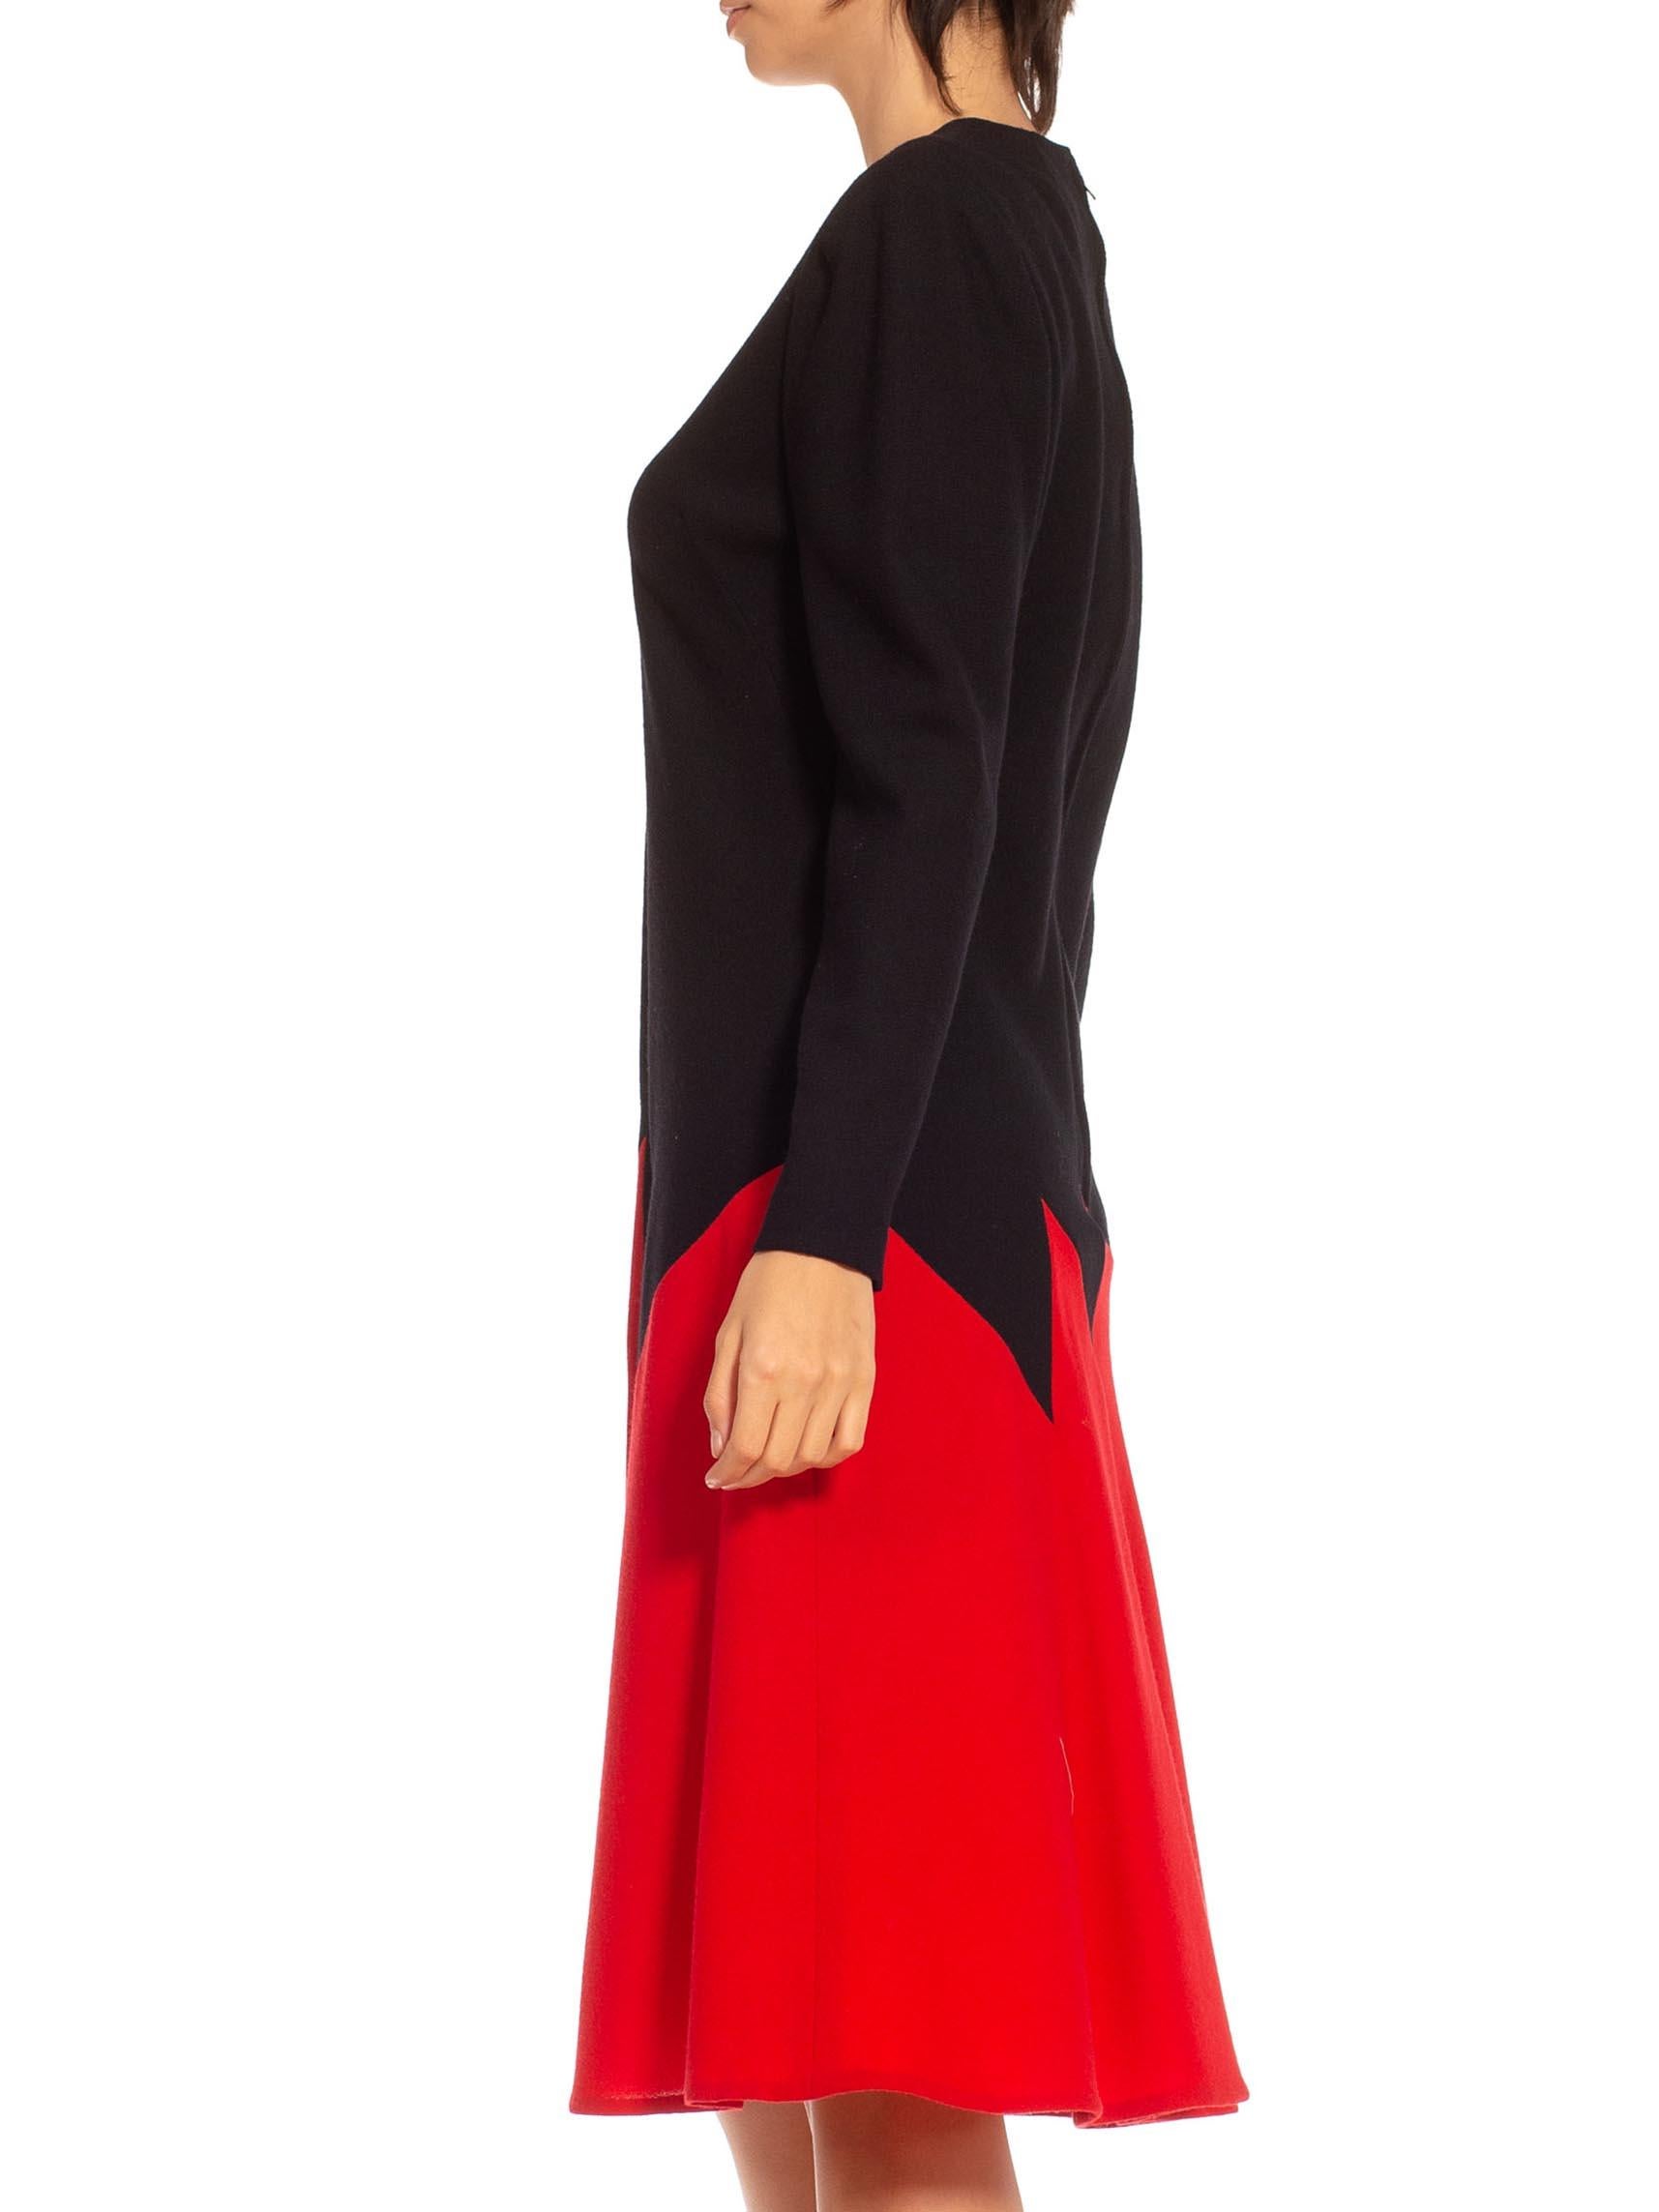 long sleeved red dress